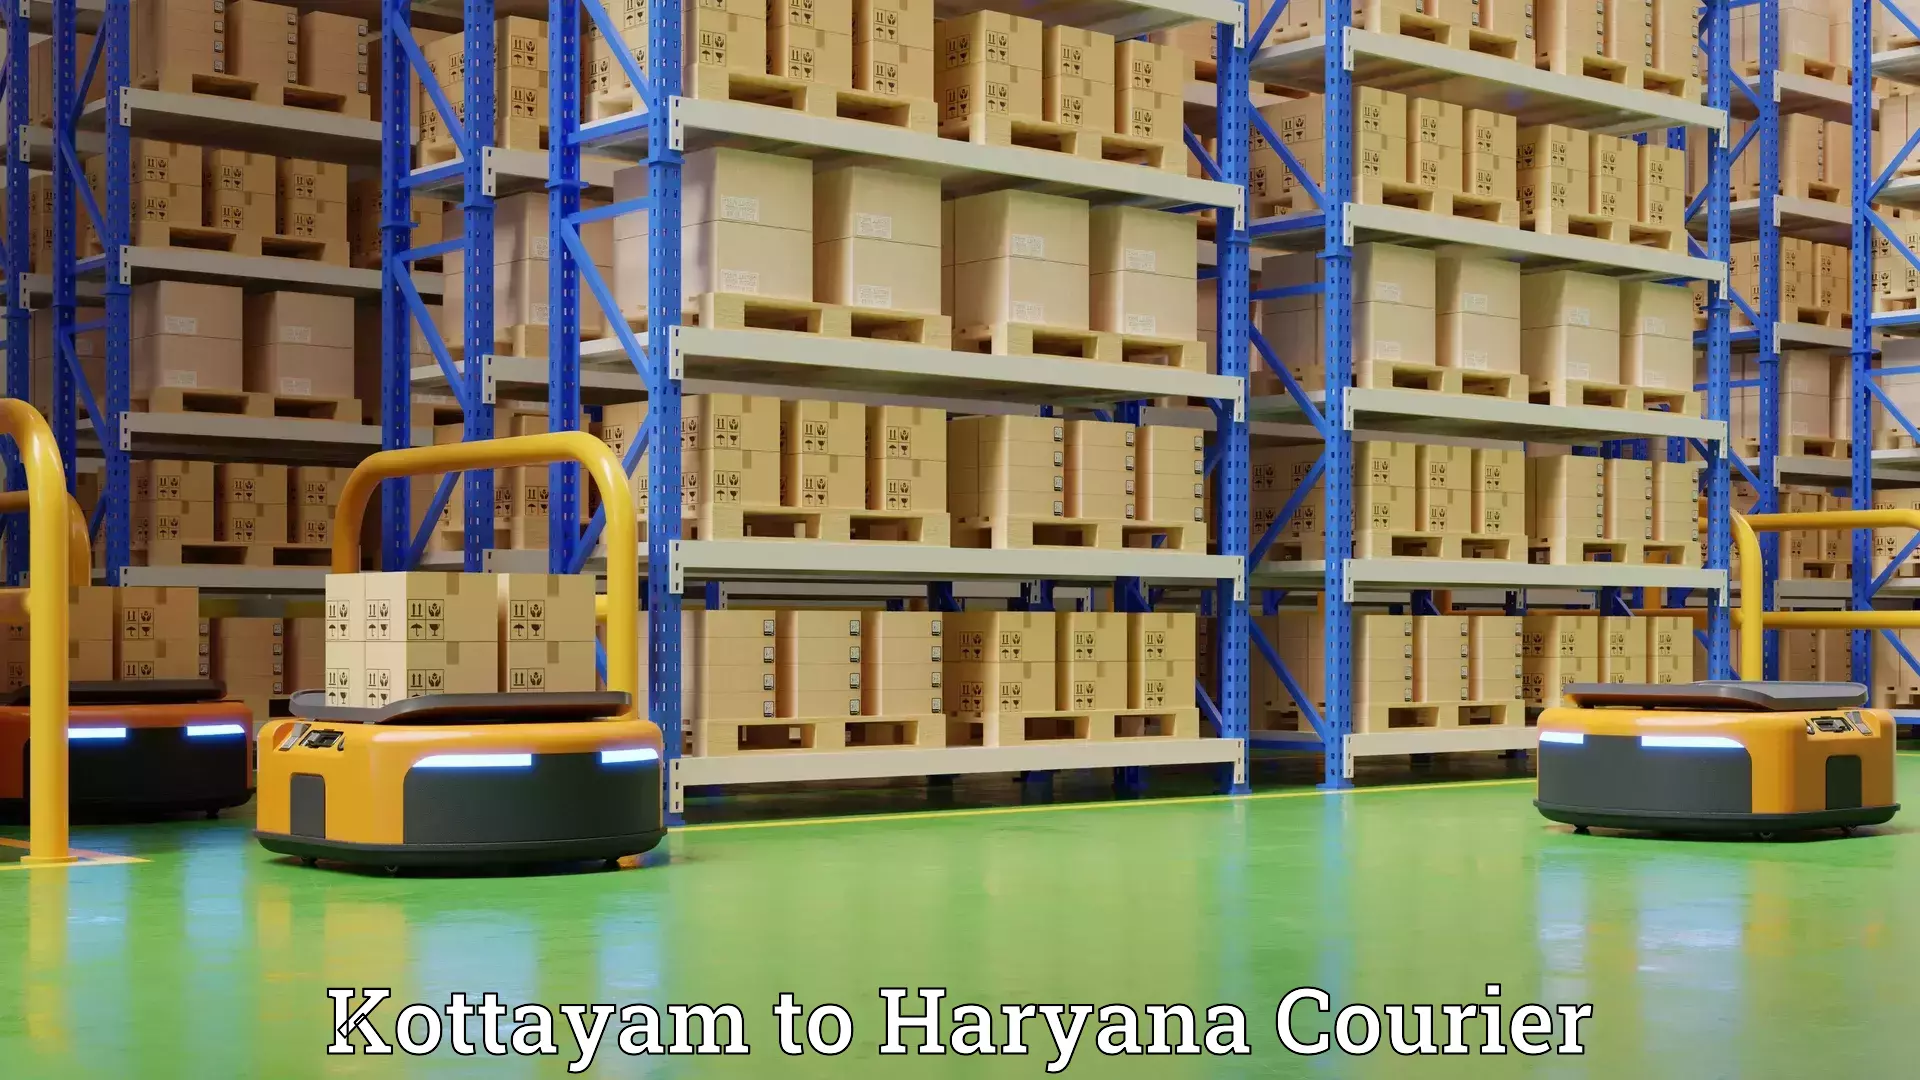 Professional moving company Kottayam to Haryana